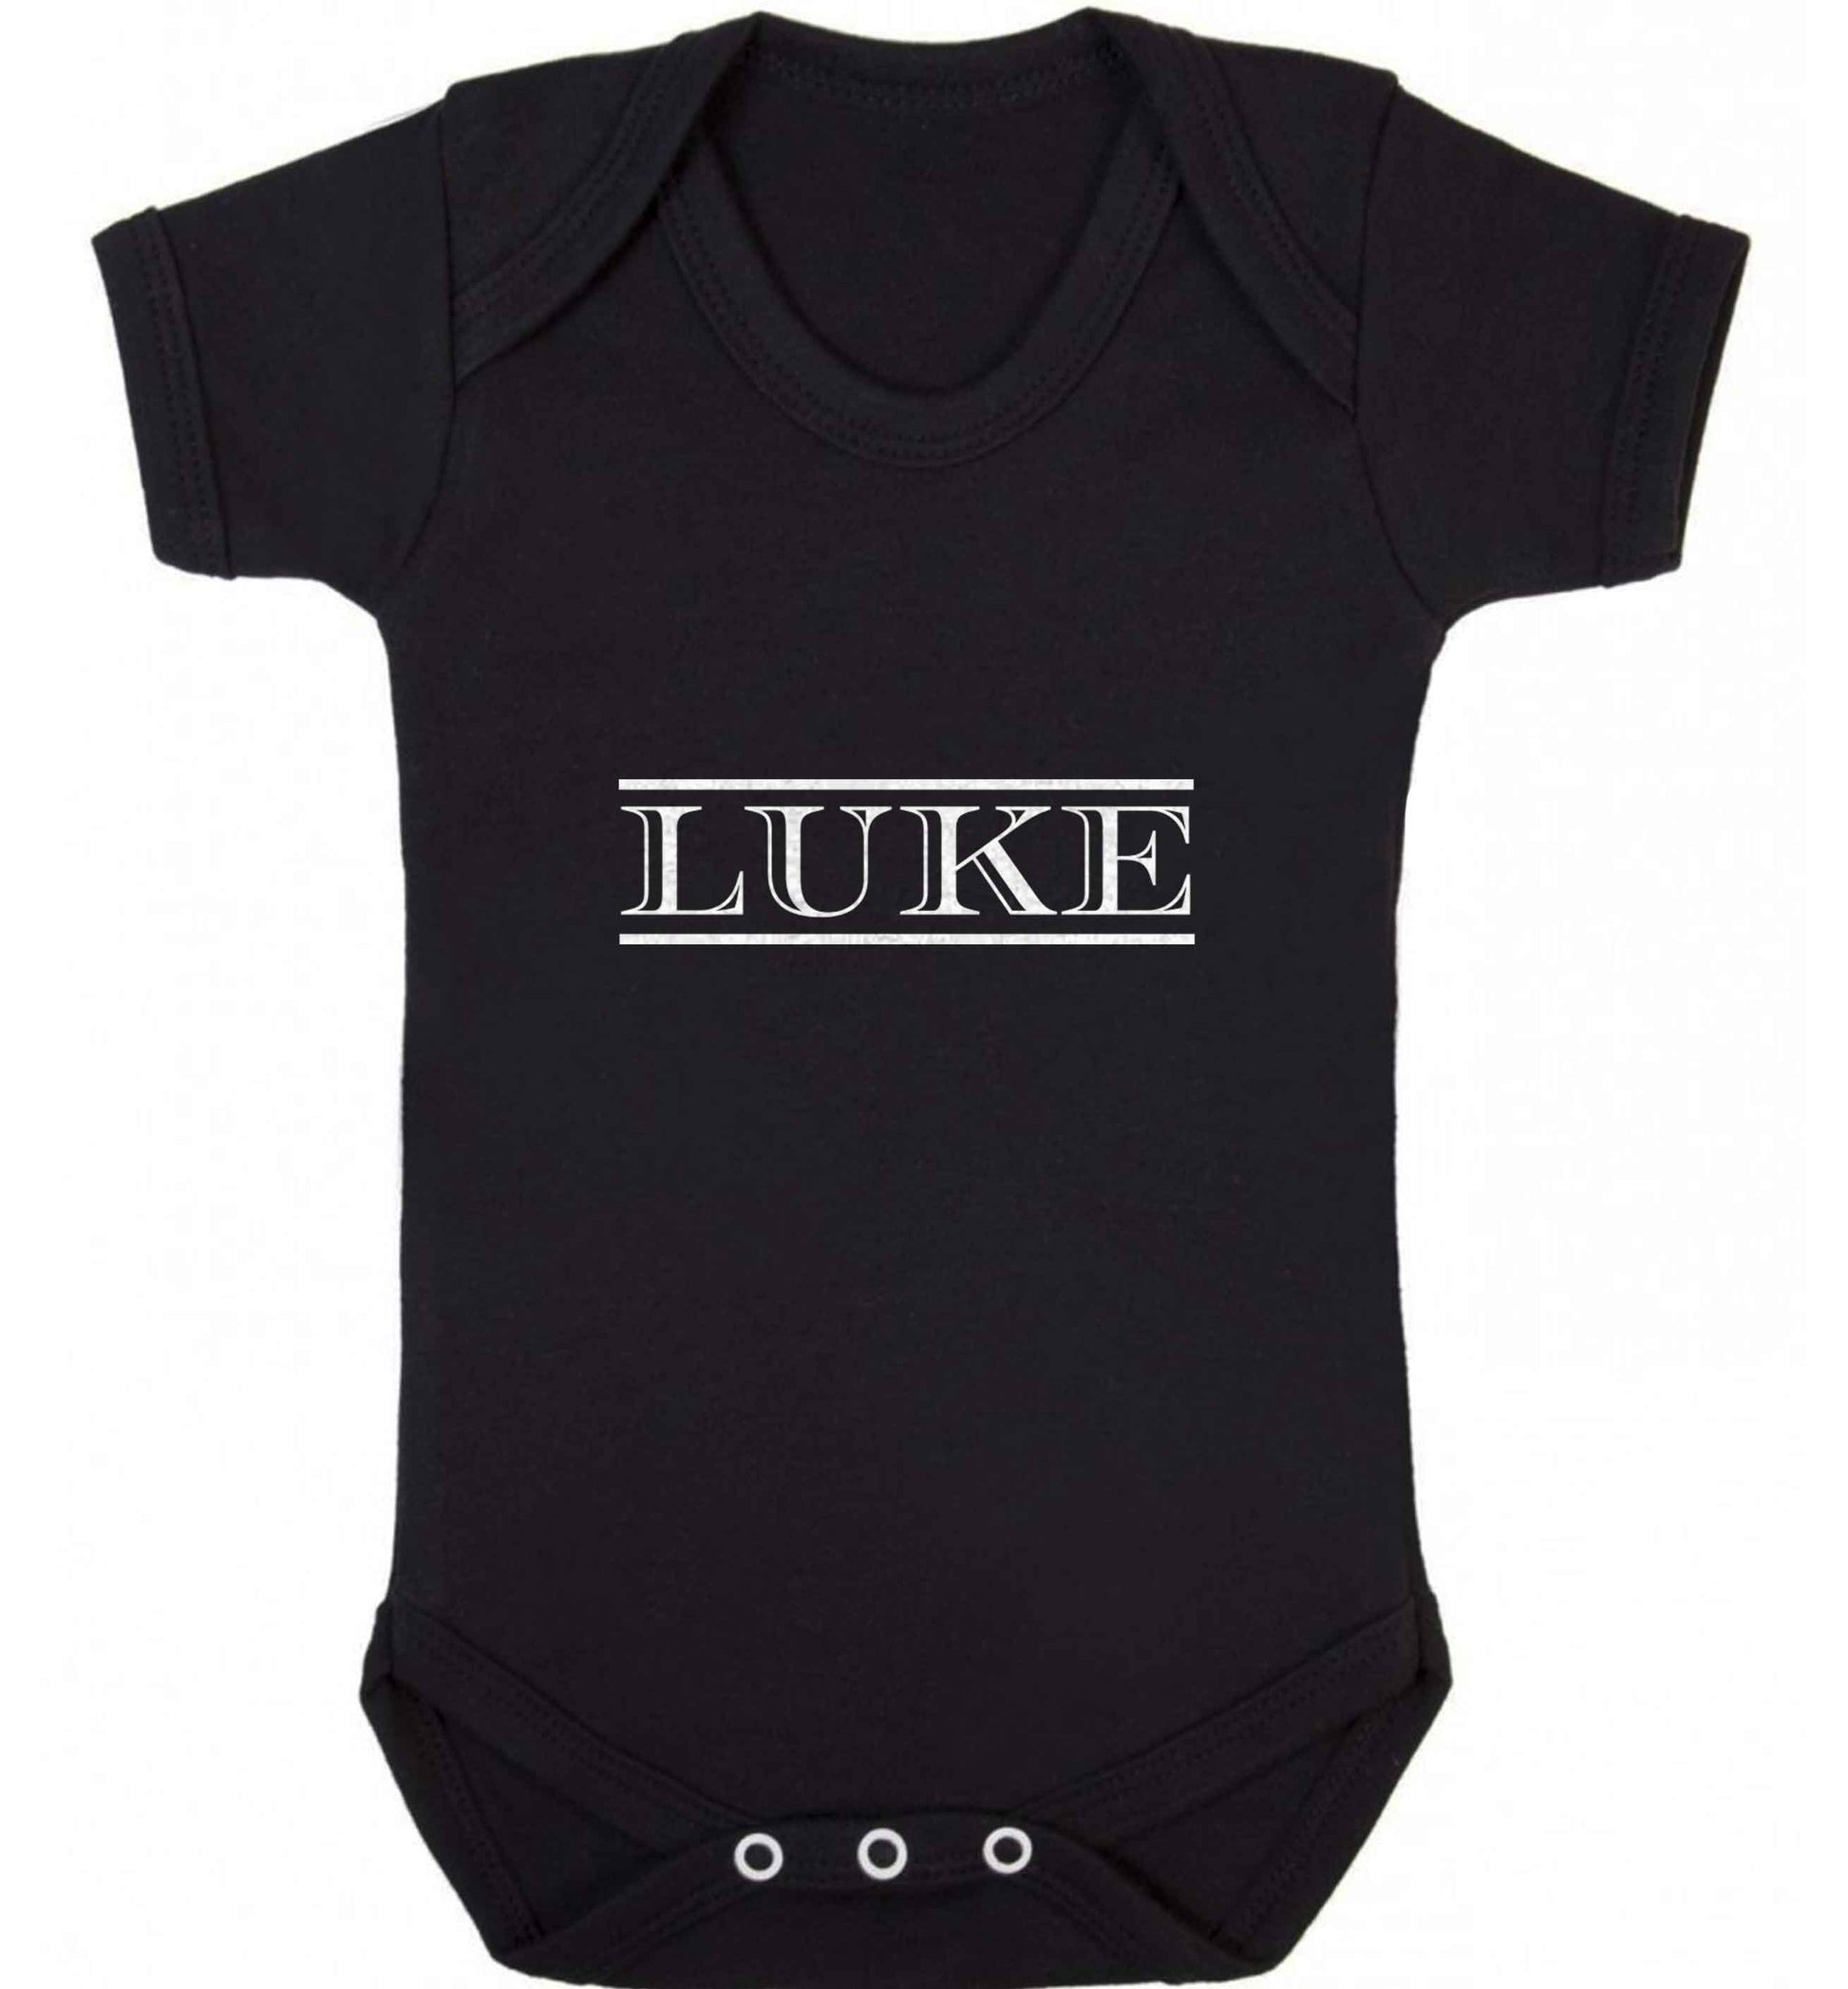 Personalised name baby vest black 18-24 months